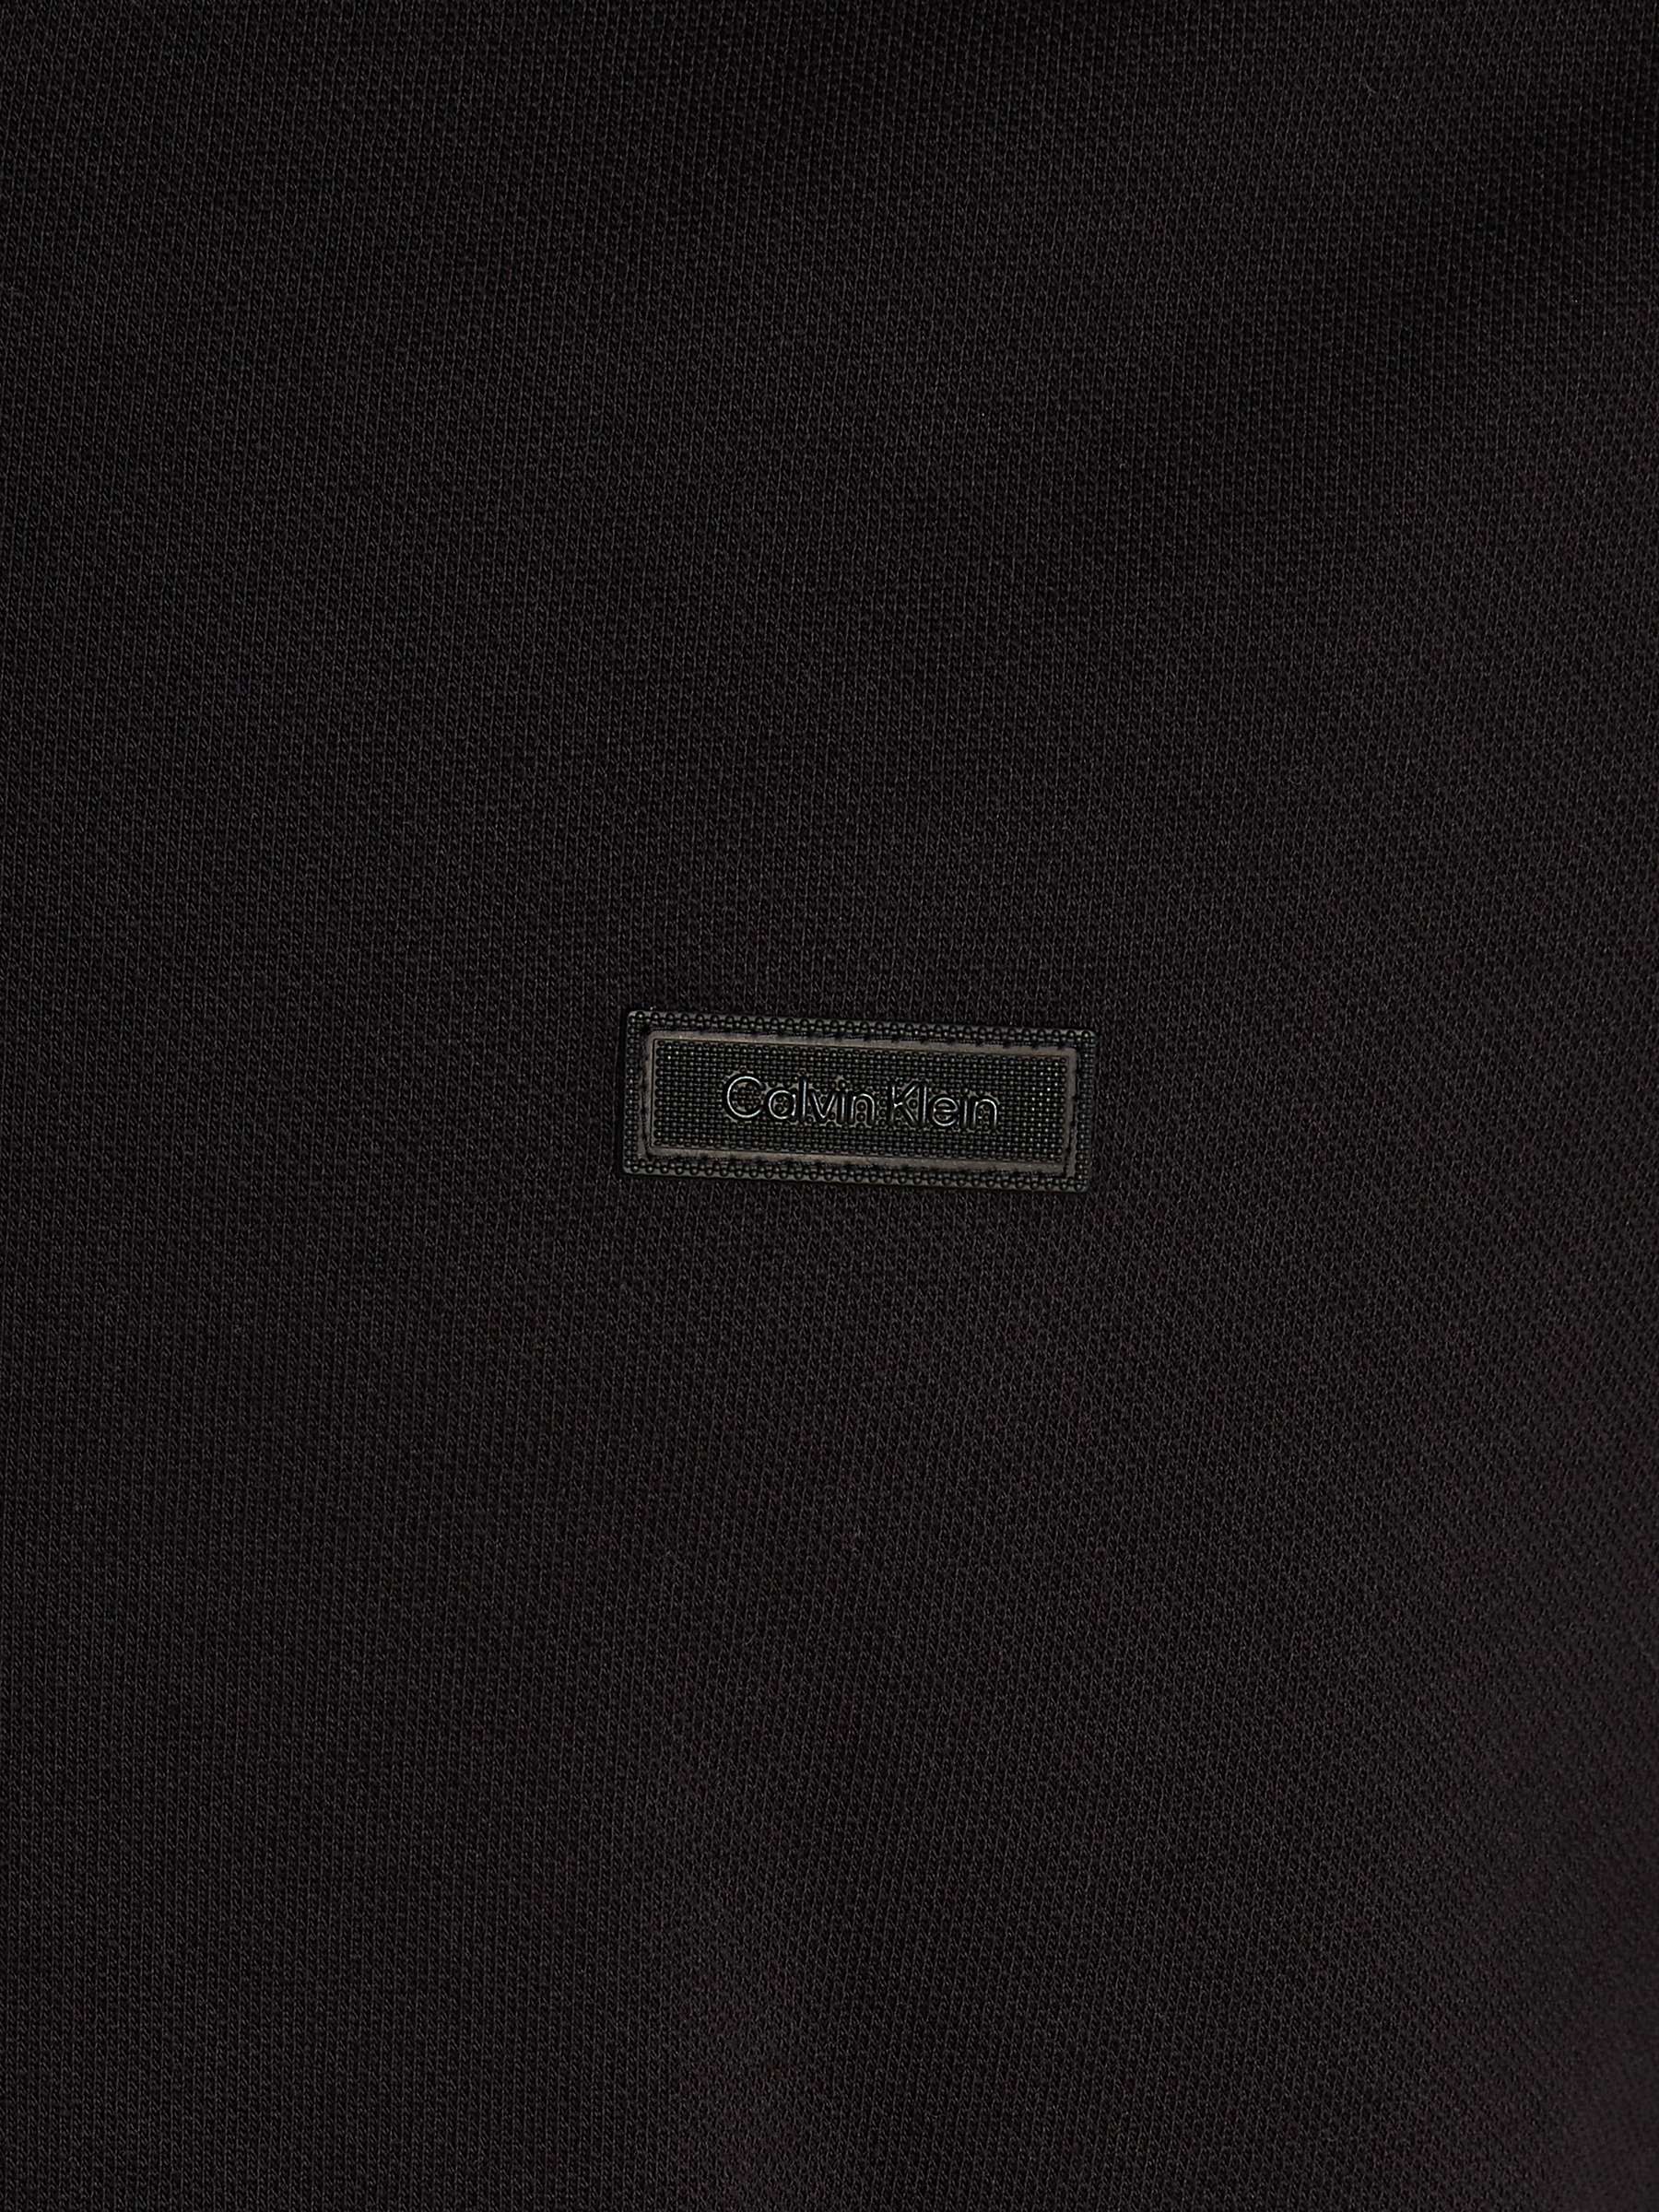 Buy Calvin Klein Heather Placket Short Sleeve Polo Shirt, Black Online at johnlewis.com